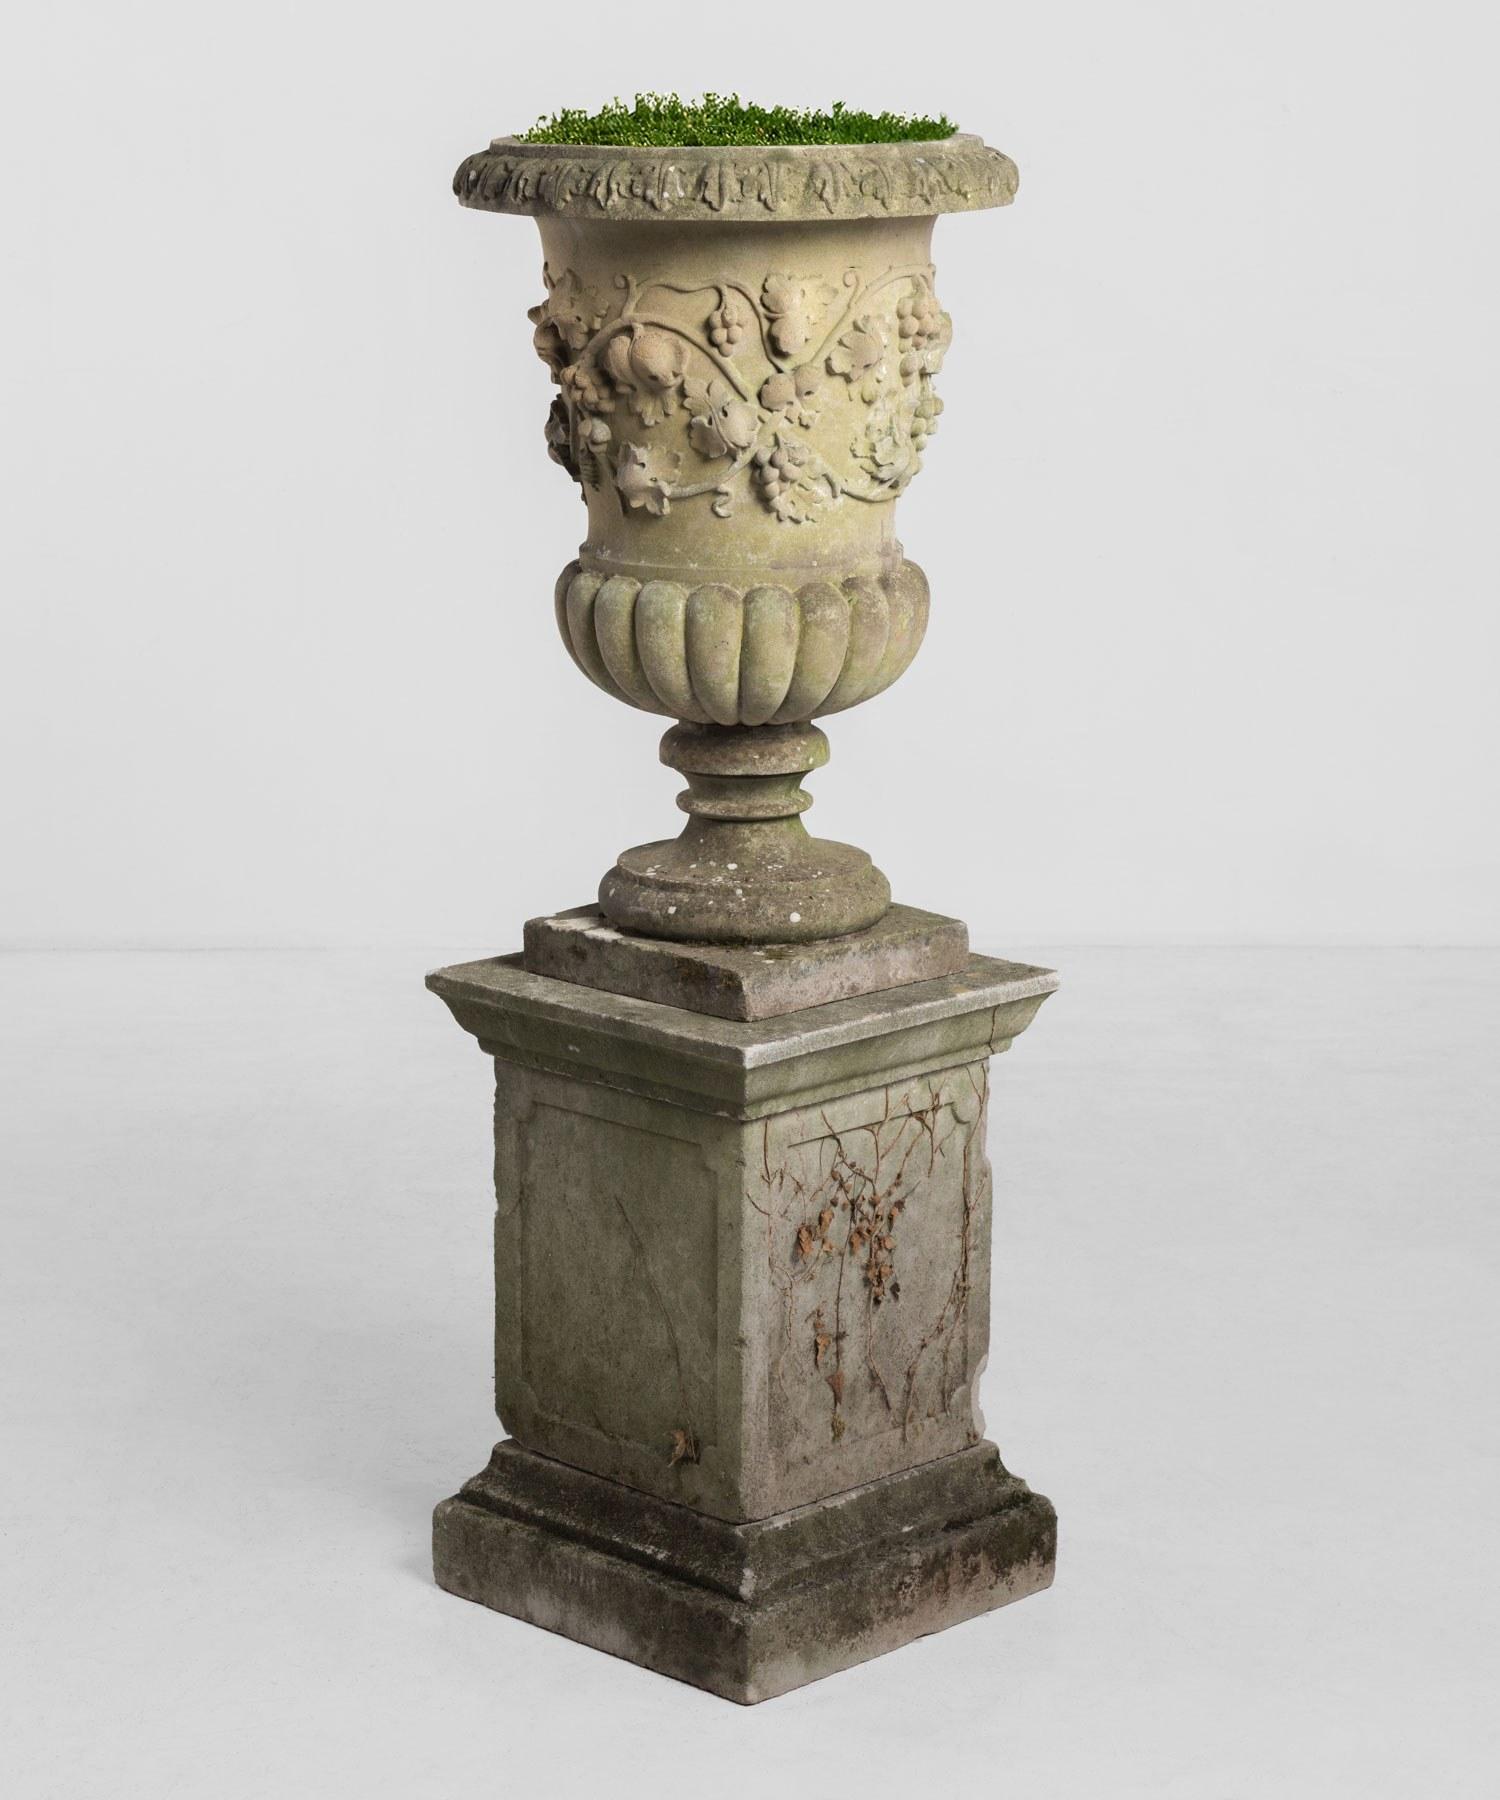 Decorative cast stone urn with pedestal, circa 1950.

Beautifully cast urn with decorative flower motif.